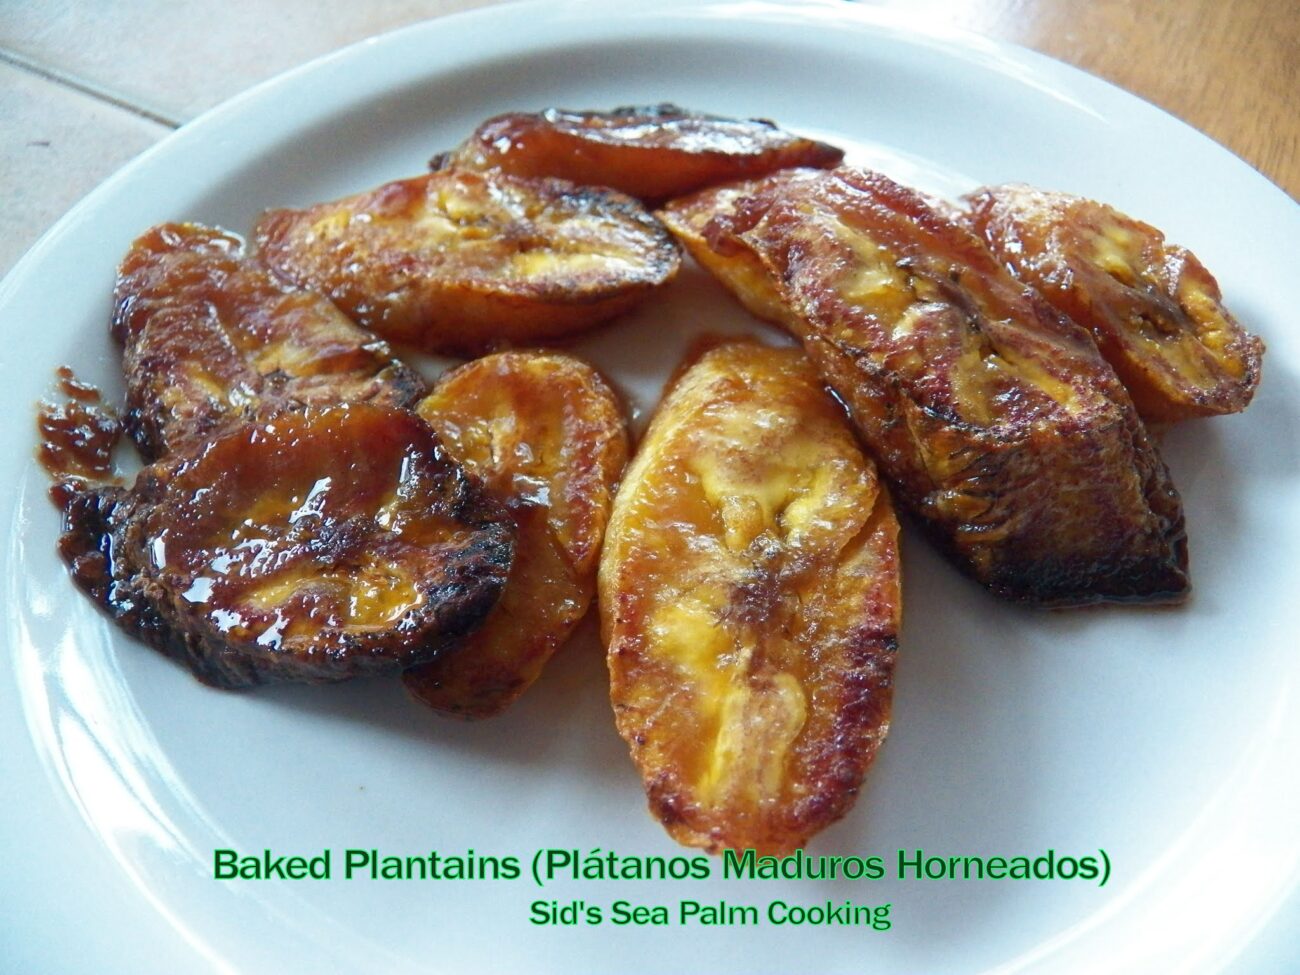 Baked Plantains – Cooking Bananas